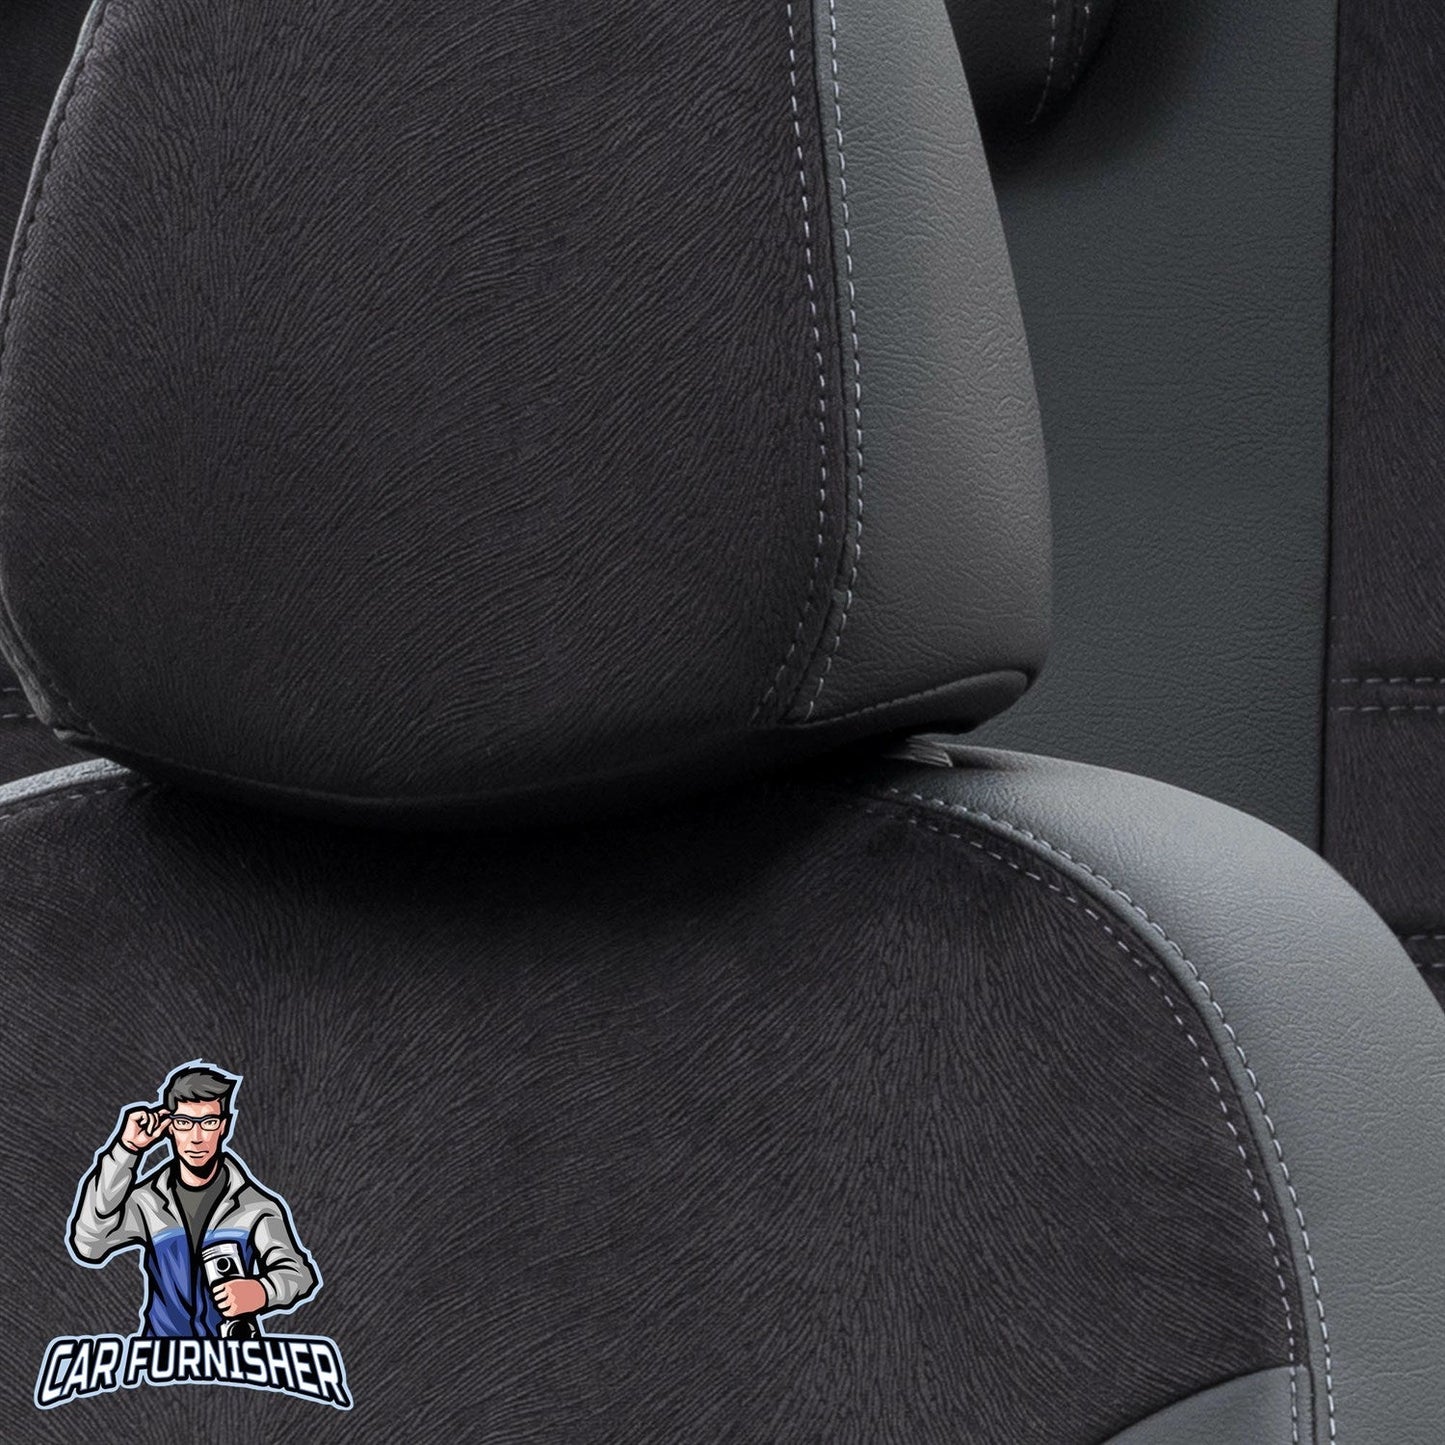 Daihatsu Materia Seat Covers London Foal Feather Design Black Leather & Foal Feather